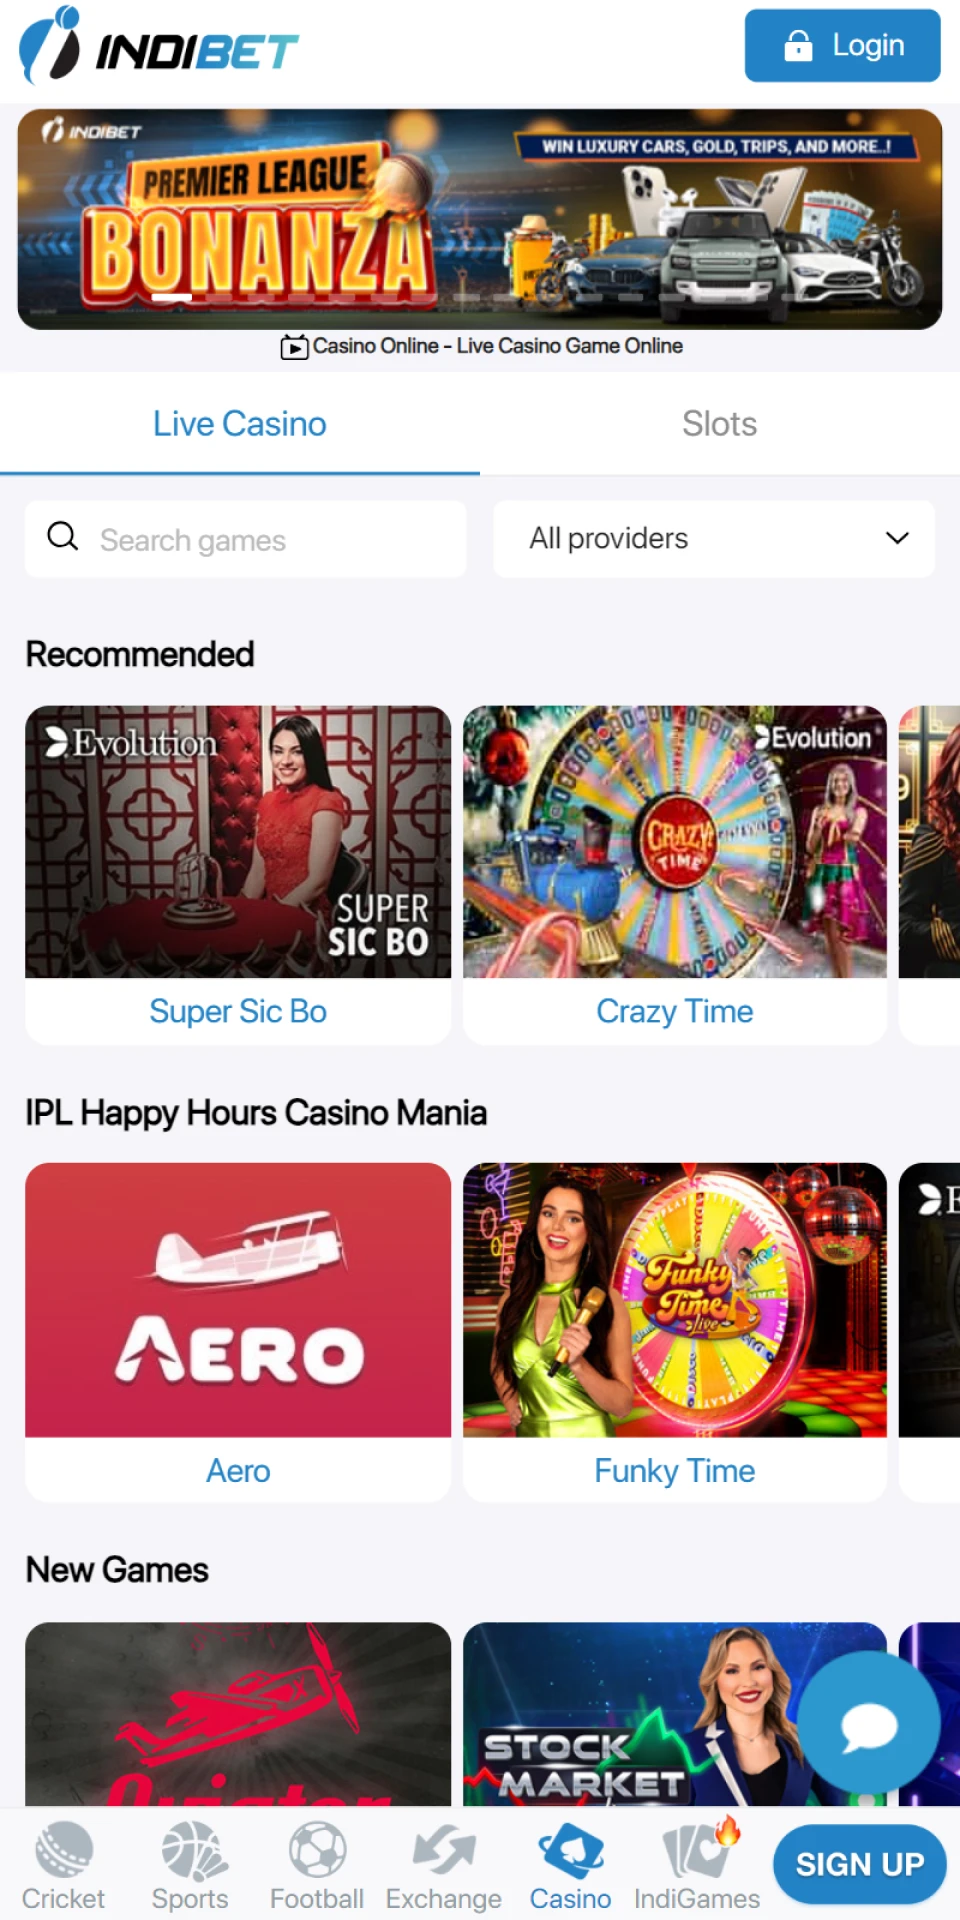 Play casino games on the Indibet app.